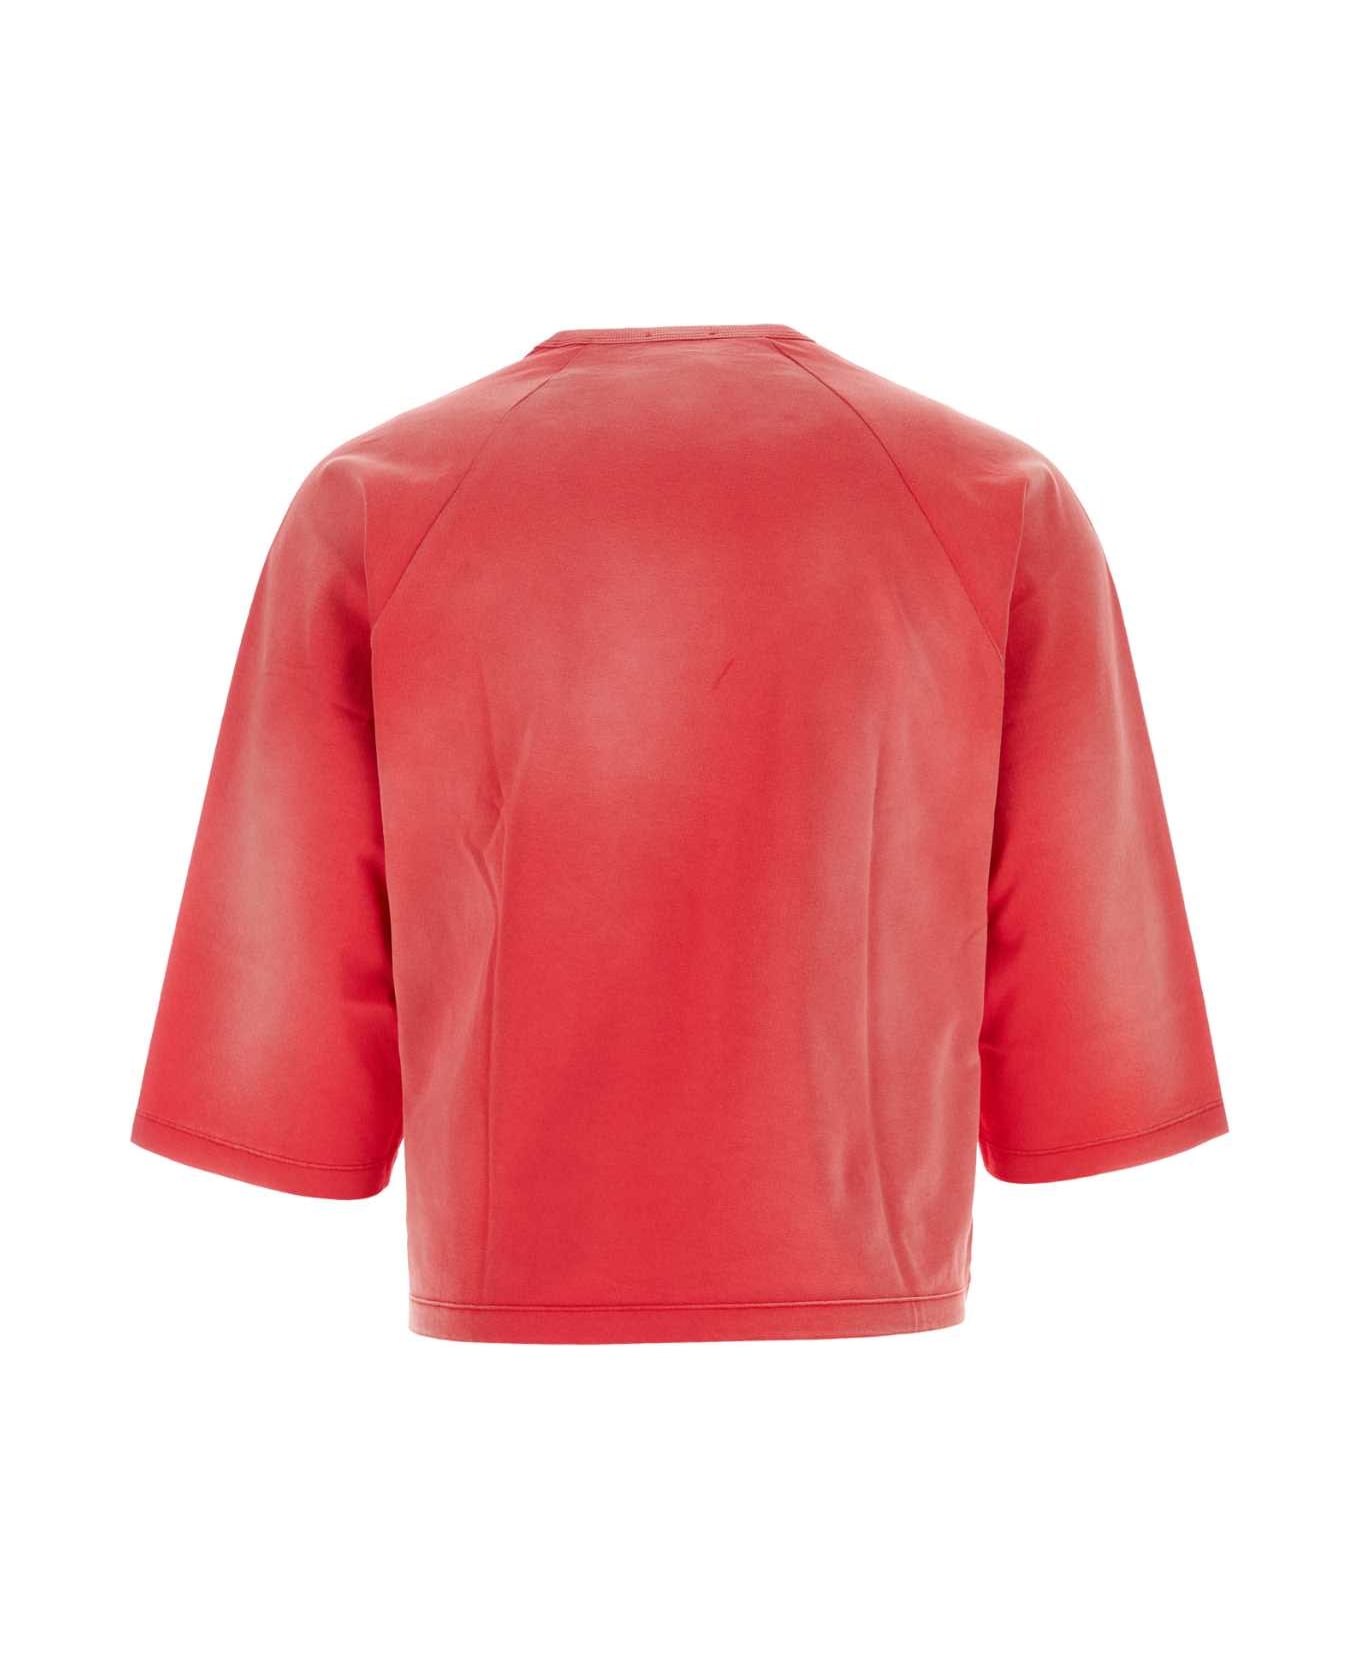 Diesel Red Cotton T-shirt - 41SA